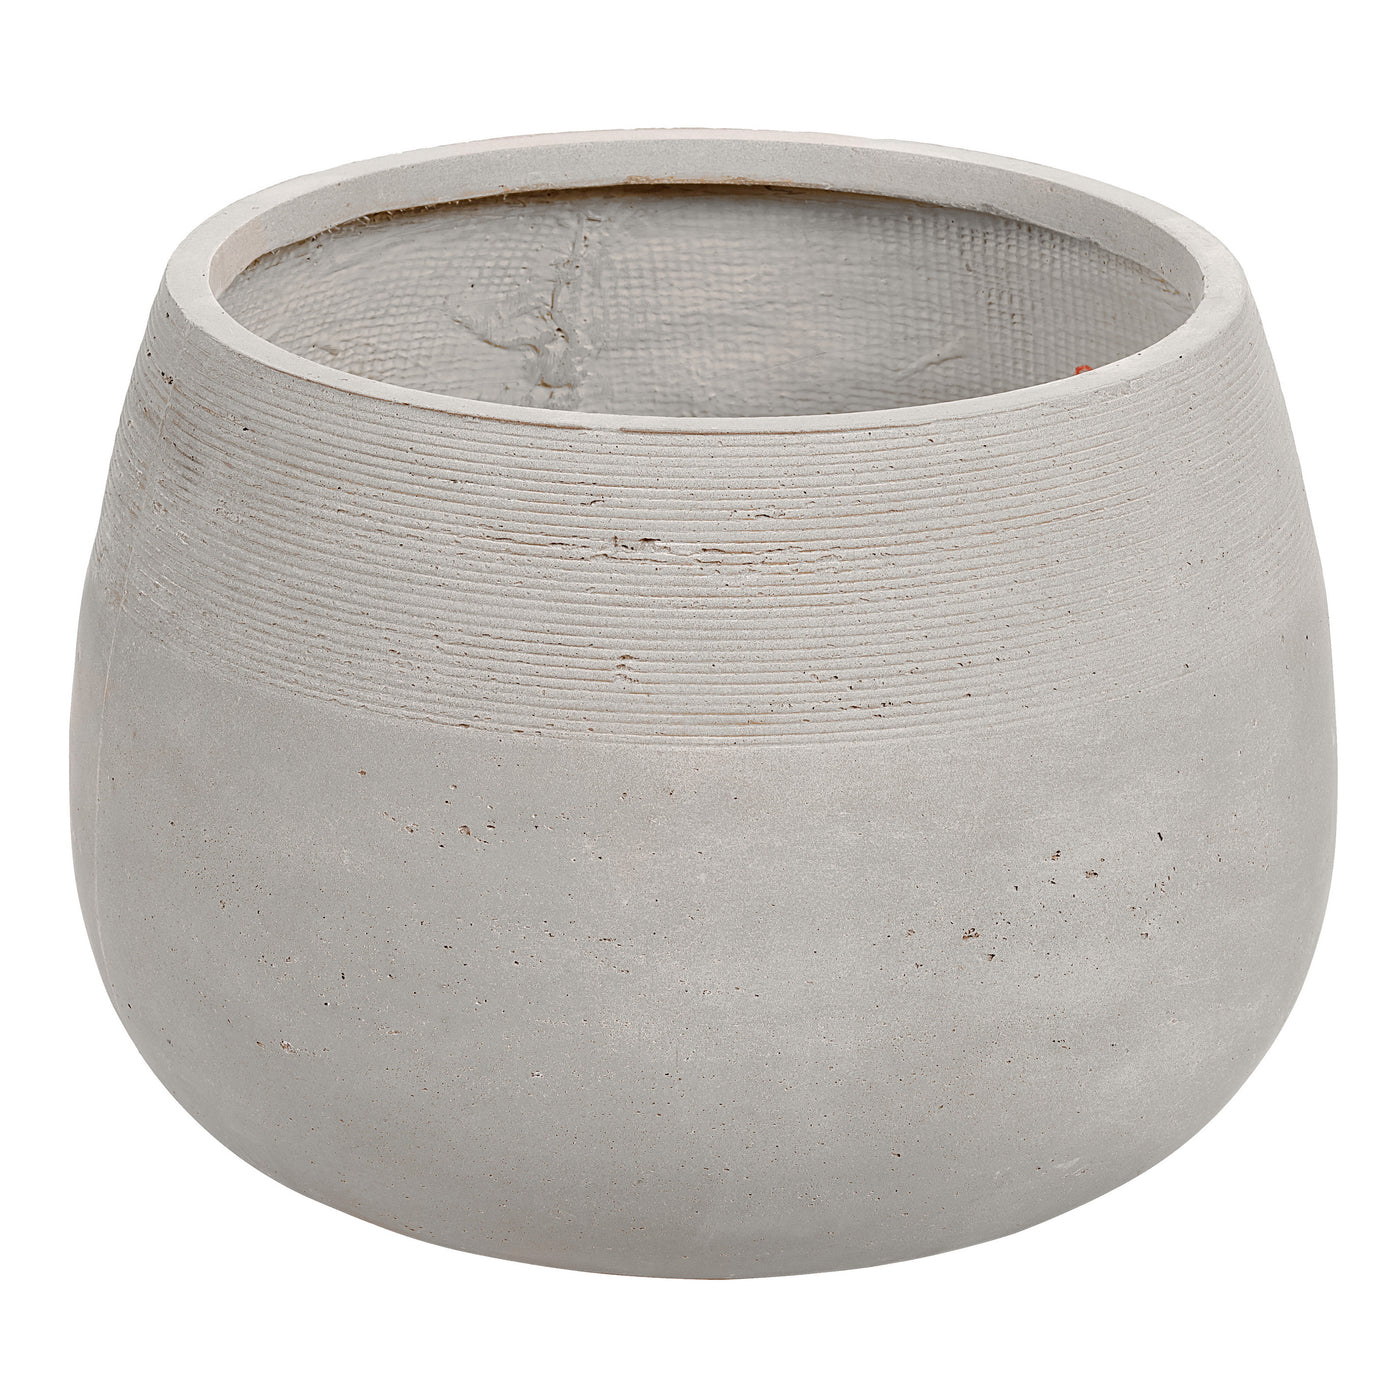 Contemporary round stonecast planter in light grey